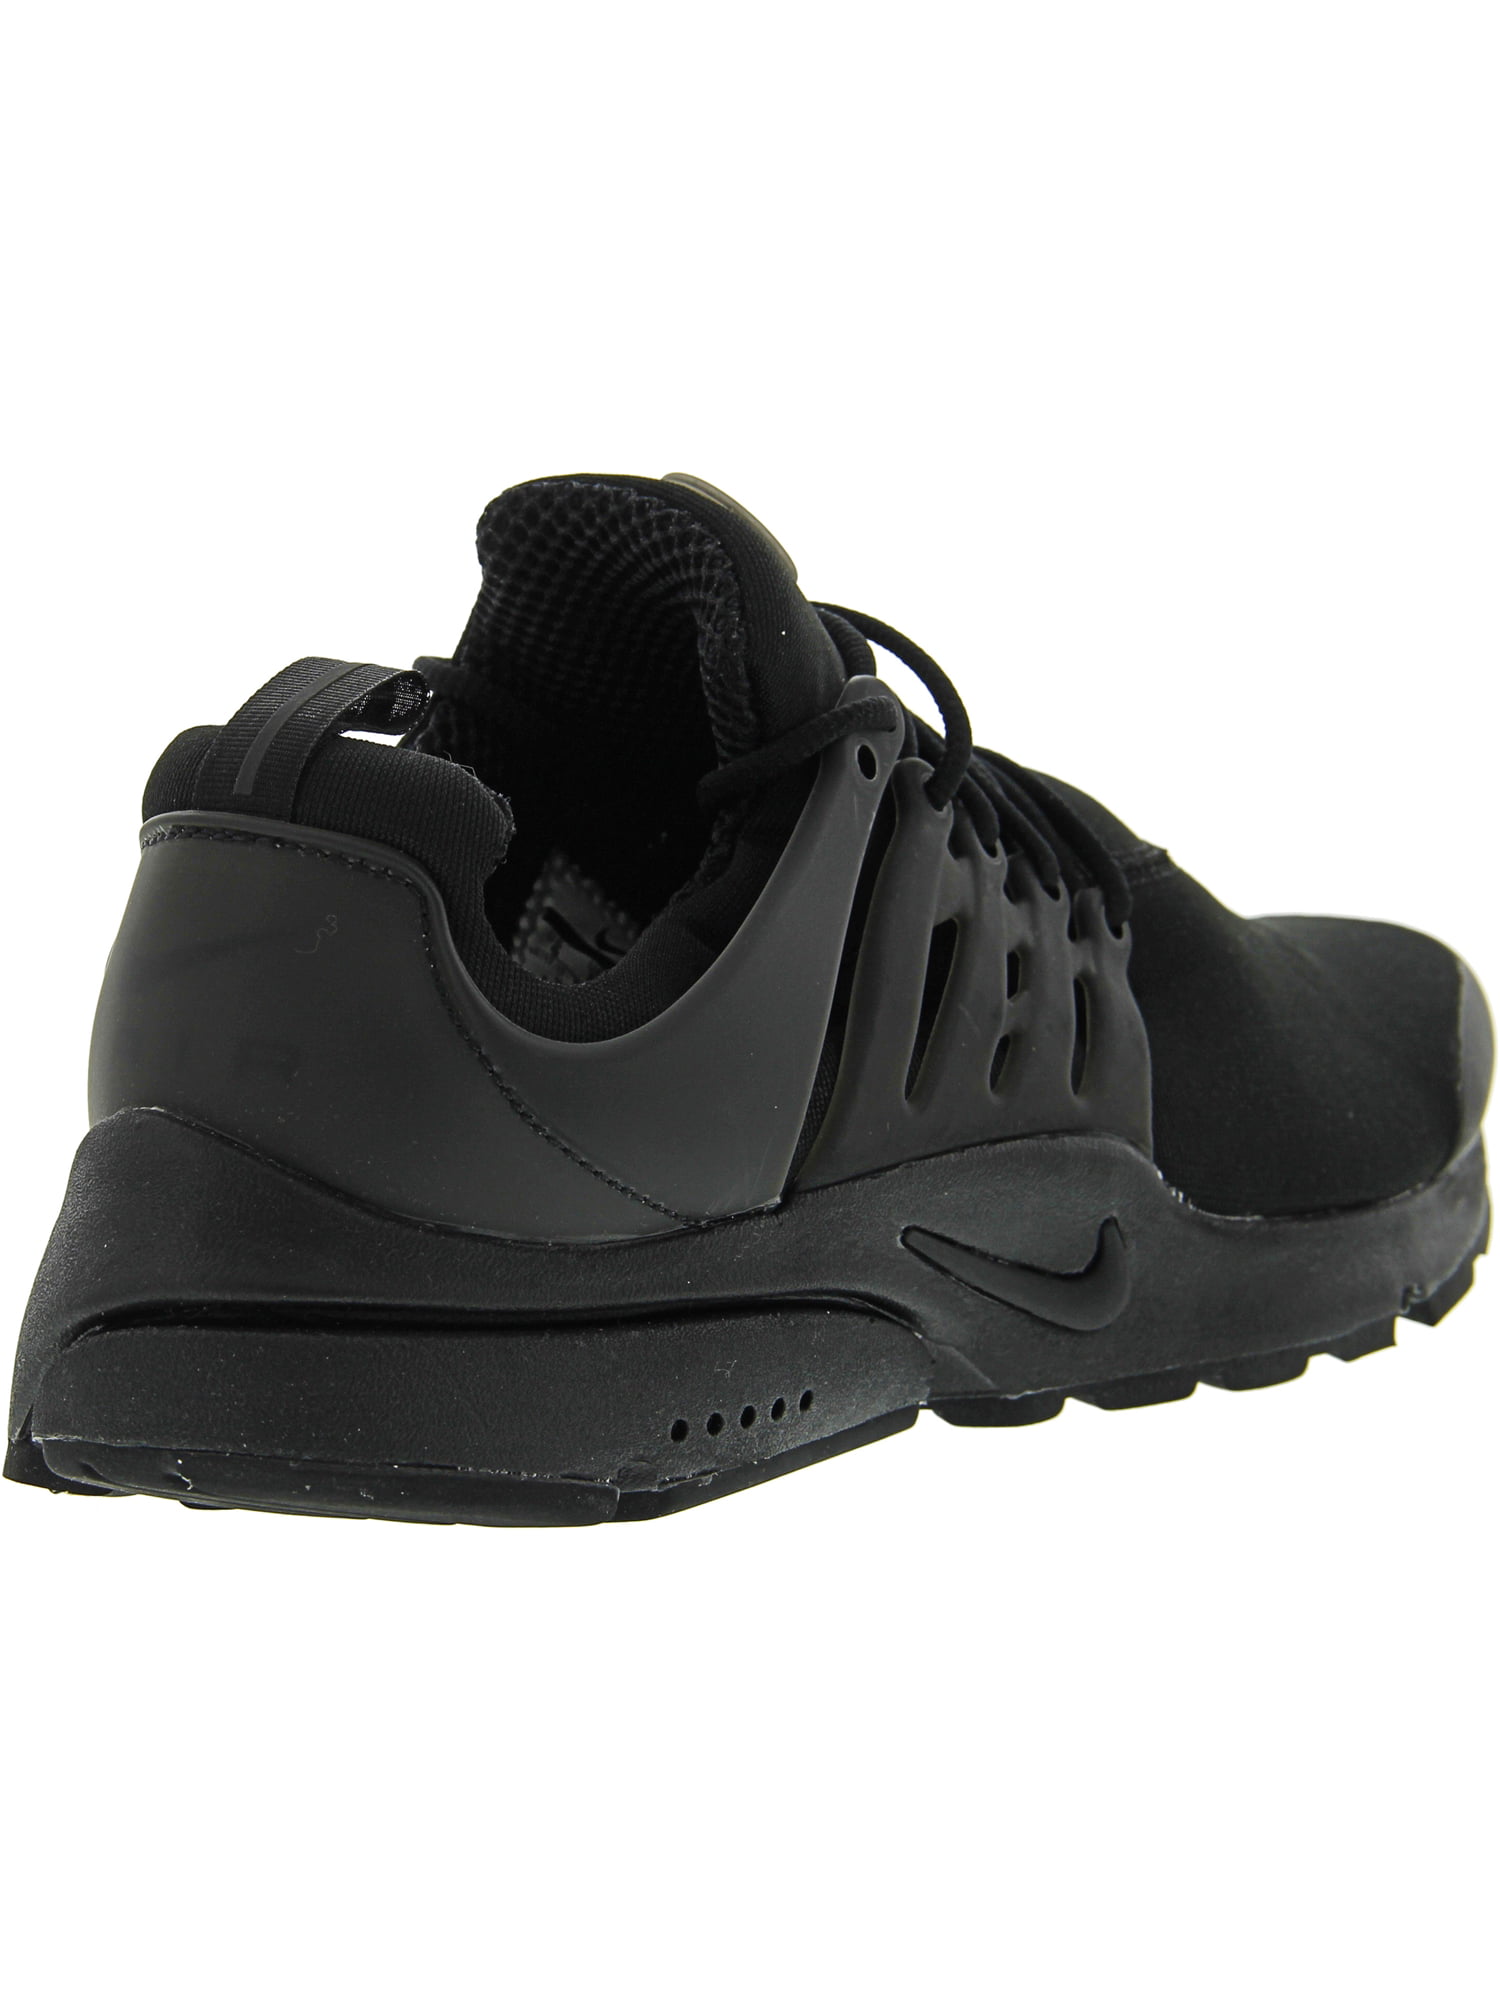 Nike Men's Air Presto Essential Black / - Ankle-High Mesh Basketball - Walmart.com